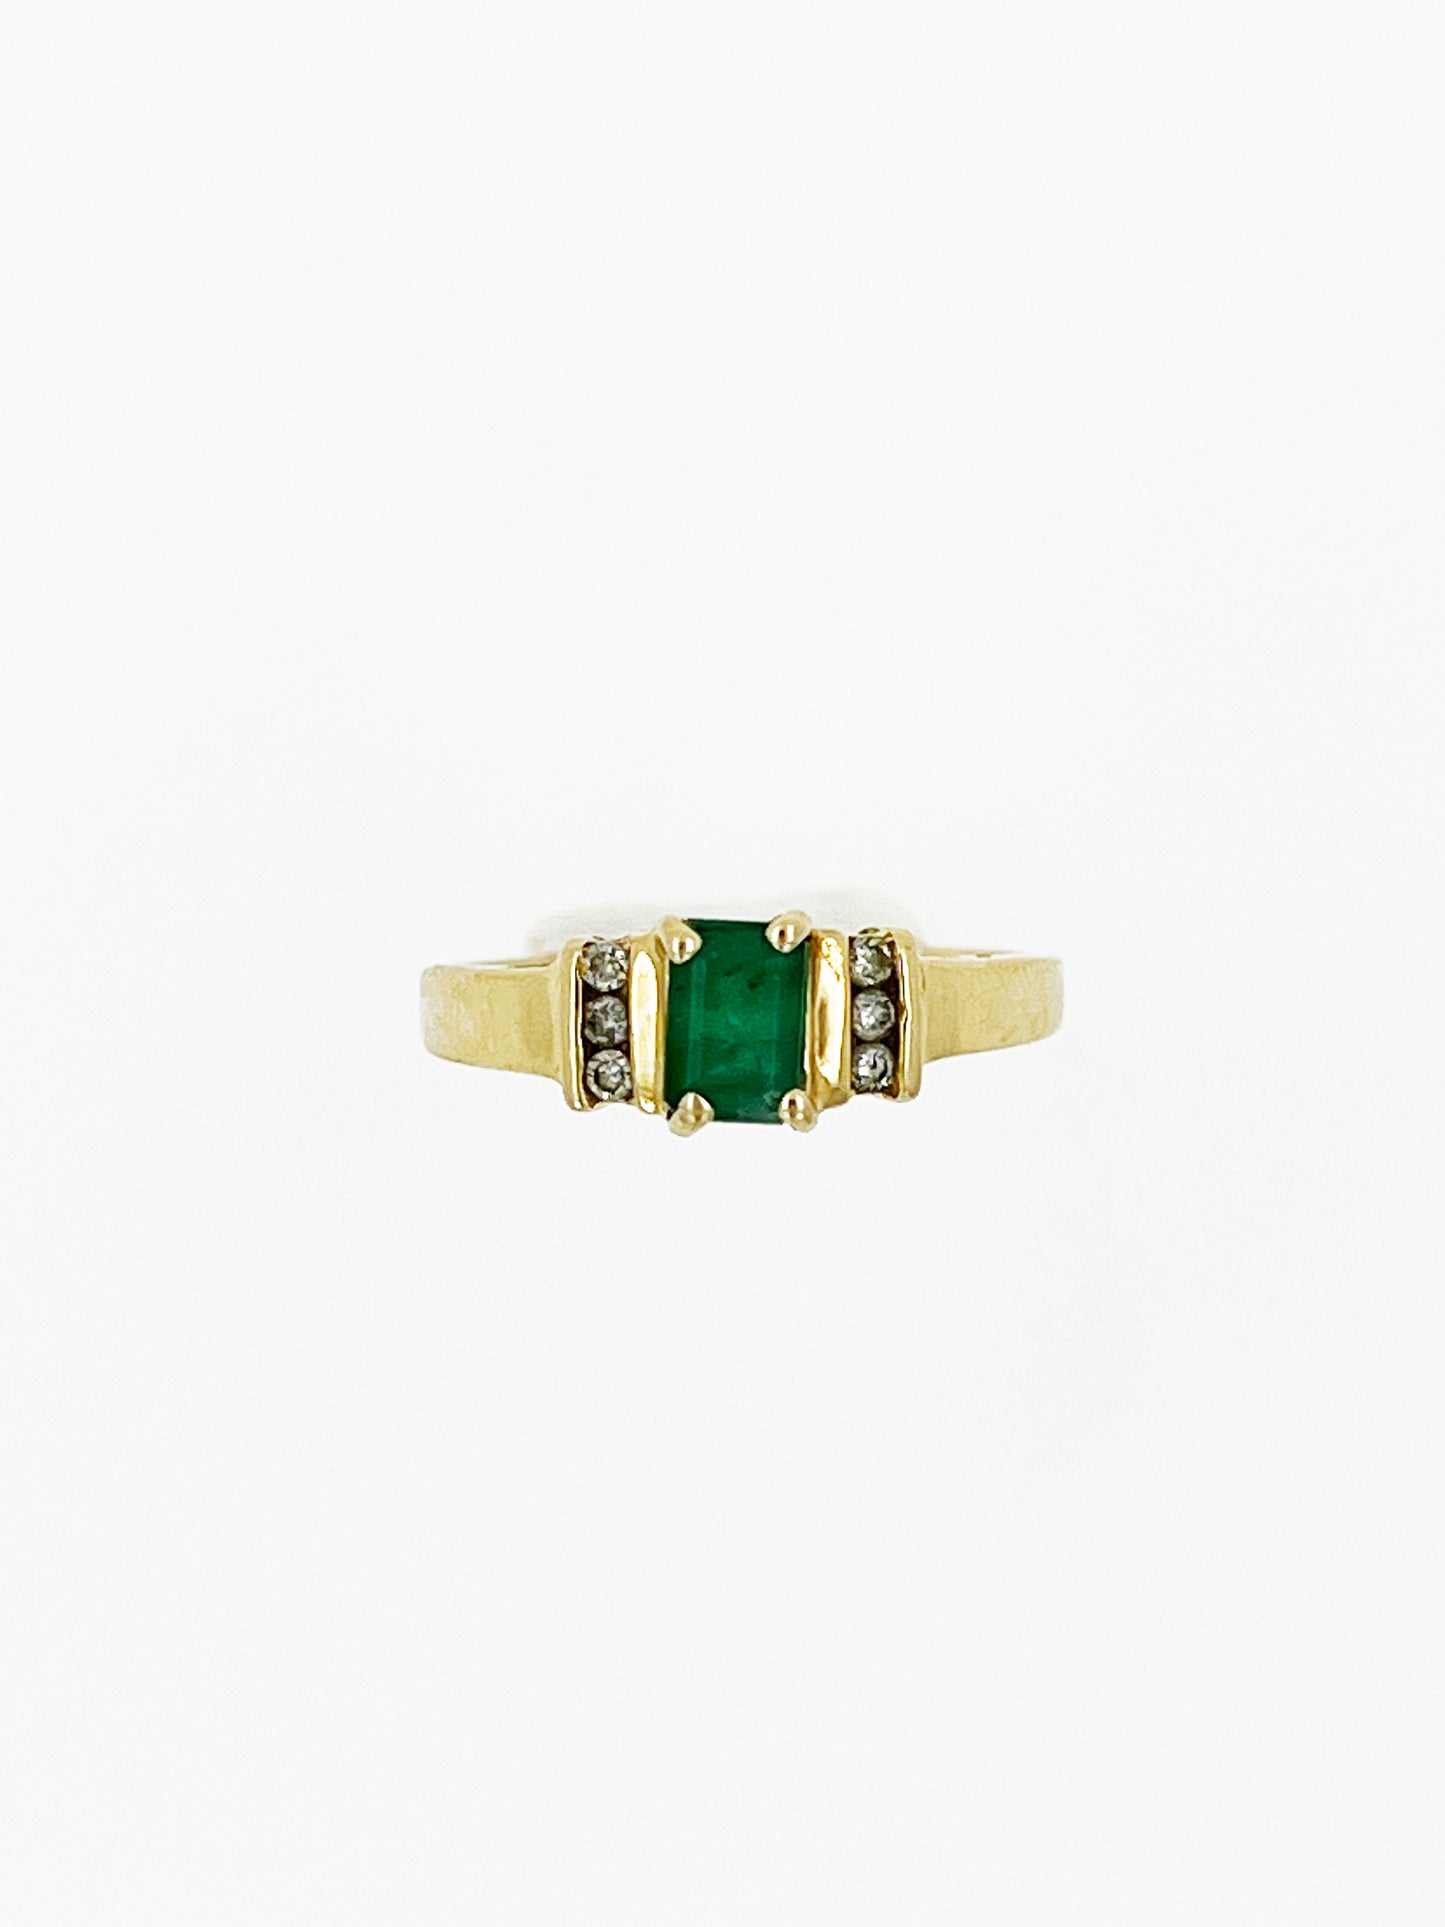 .4 Carat Natural Emerald in 14k Yellow Gold